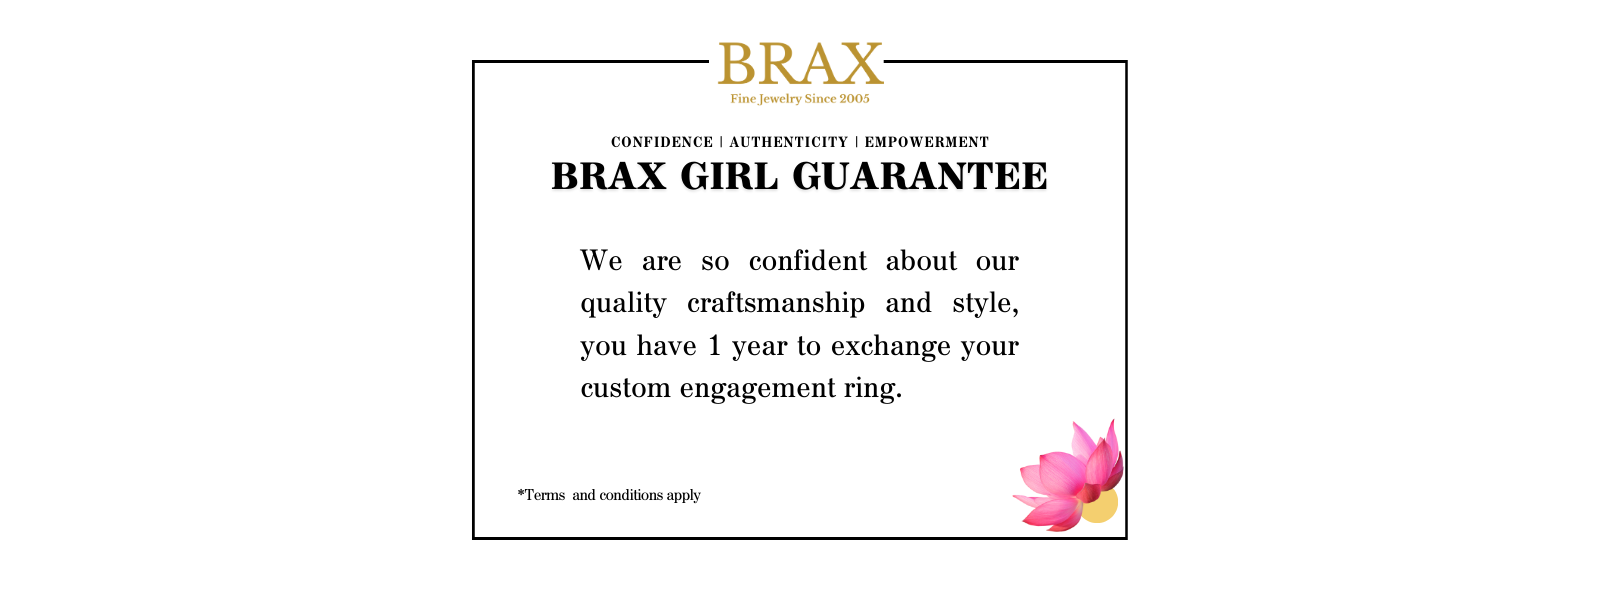 Brax Jewelers Newport Beach, CA